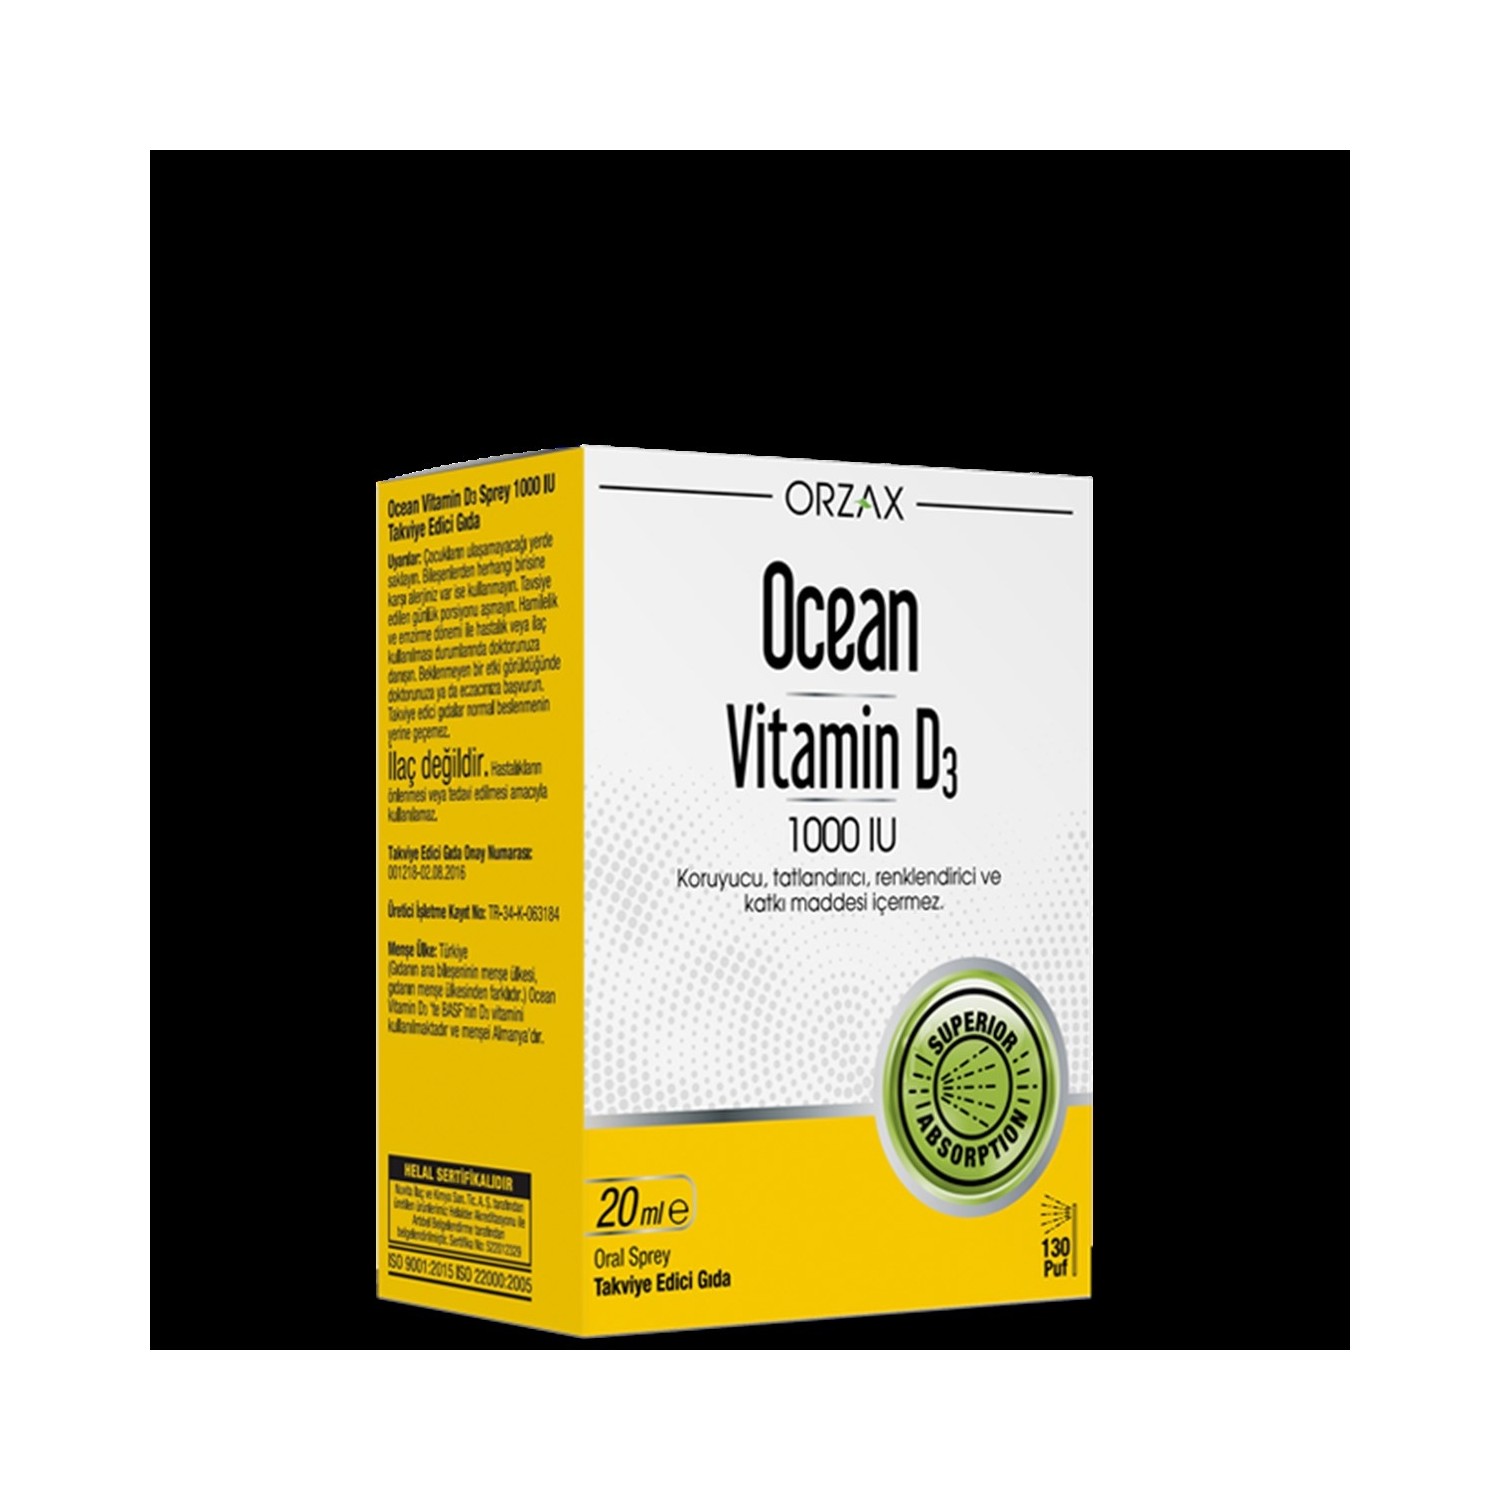 Спрей Витамин D3 Ocean Orzax 1000 МЕ, 20 мл витамины maxler vitamin d3 1200 180 мл